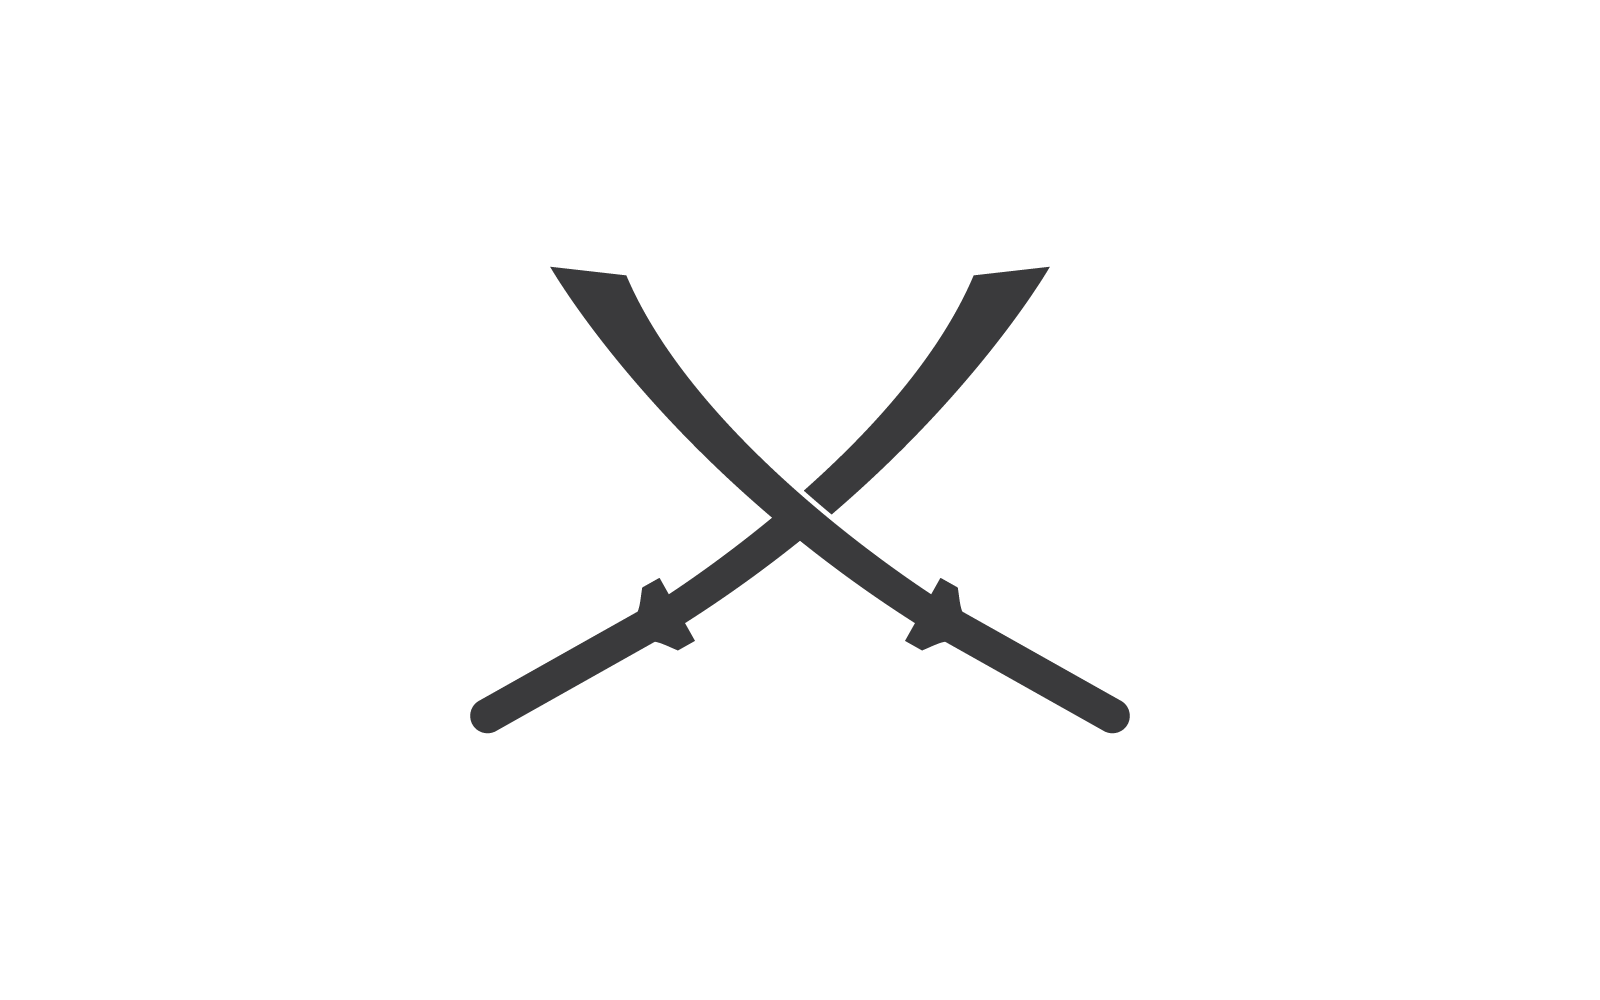 Sword illustration logo flat design